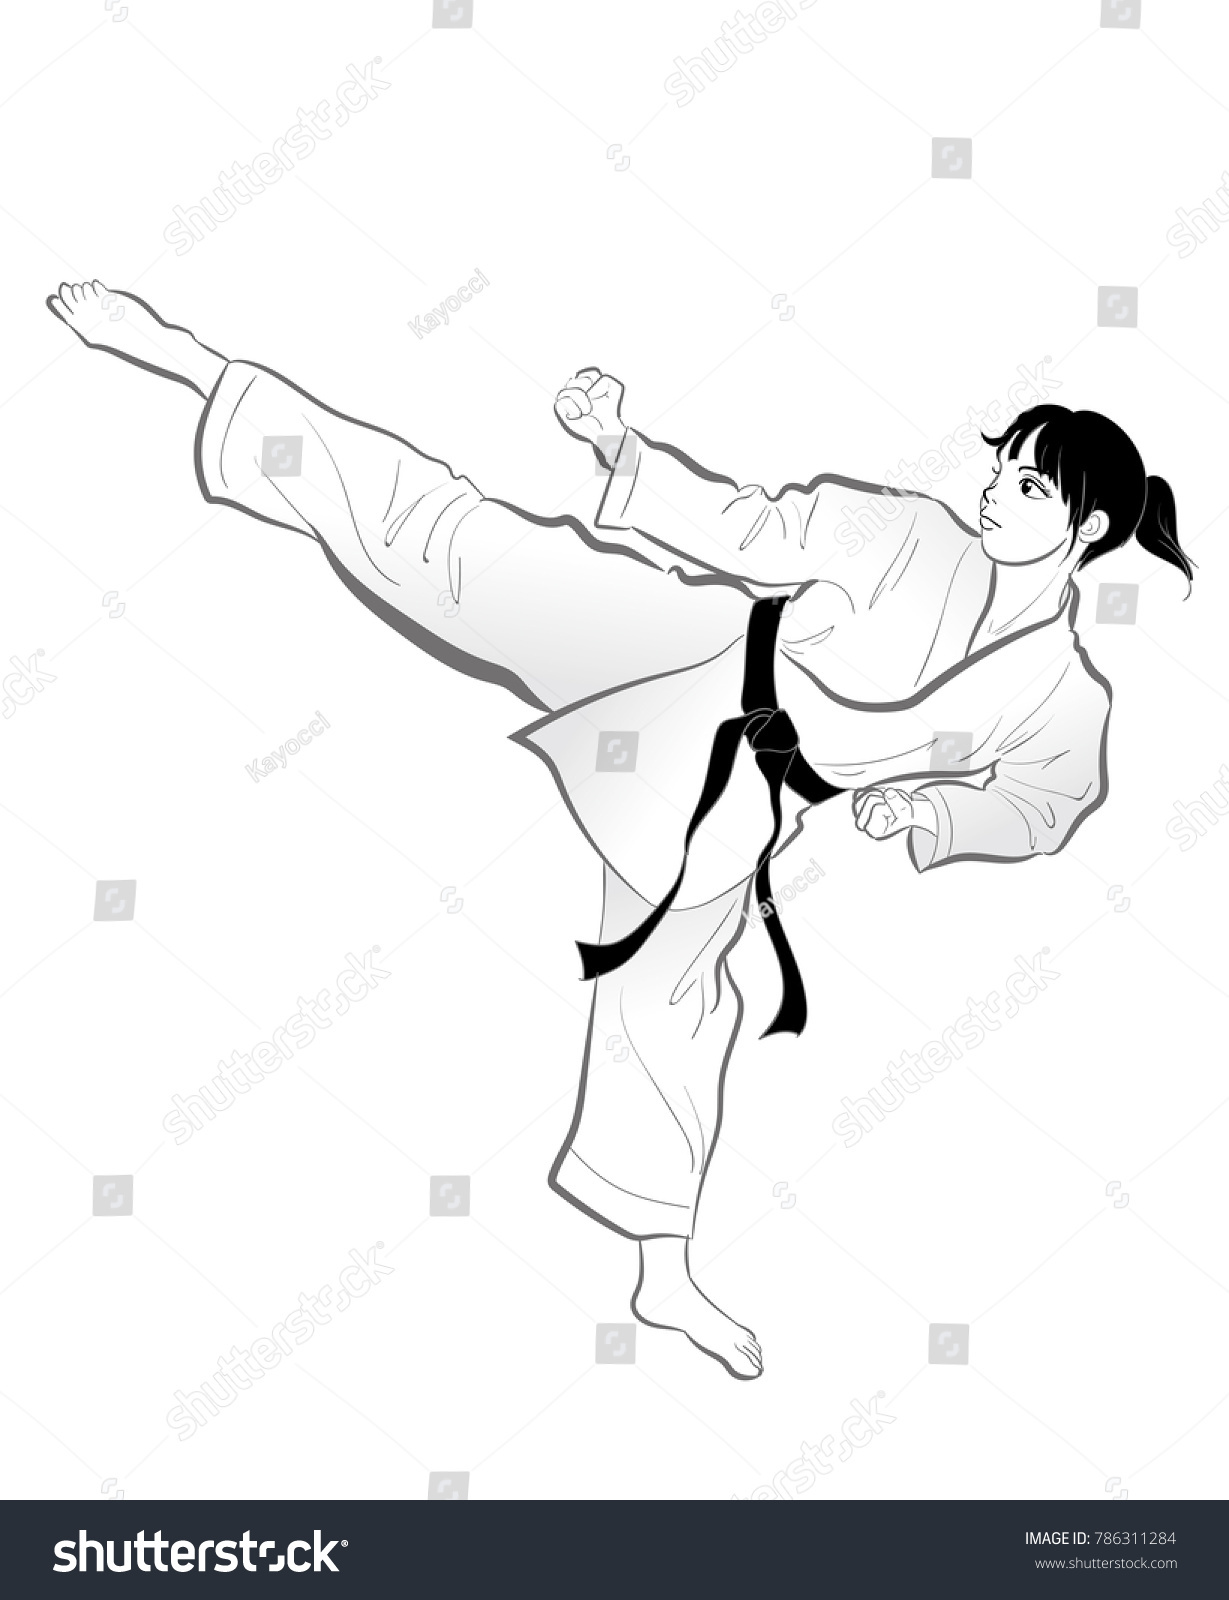 Karate Kick Pose Vector Material Japanese Stock Vector (Royalty Free ...